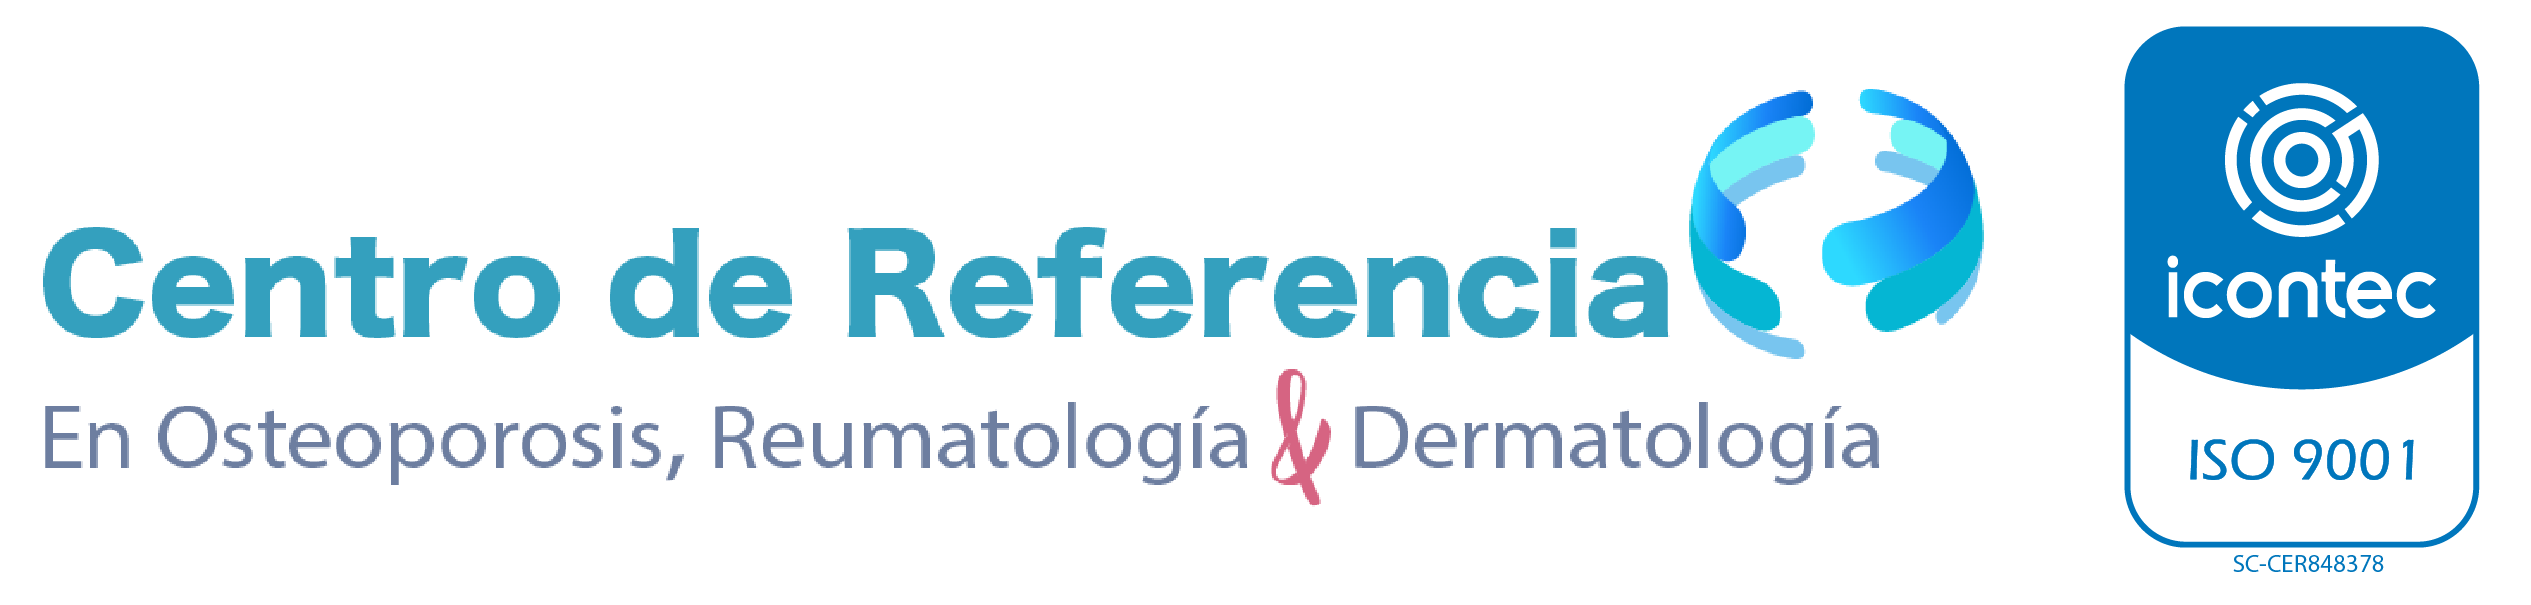 Centro de Referencia en Osteoporosis, Reumatología & Dermatología